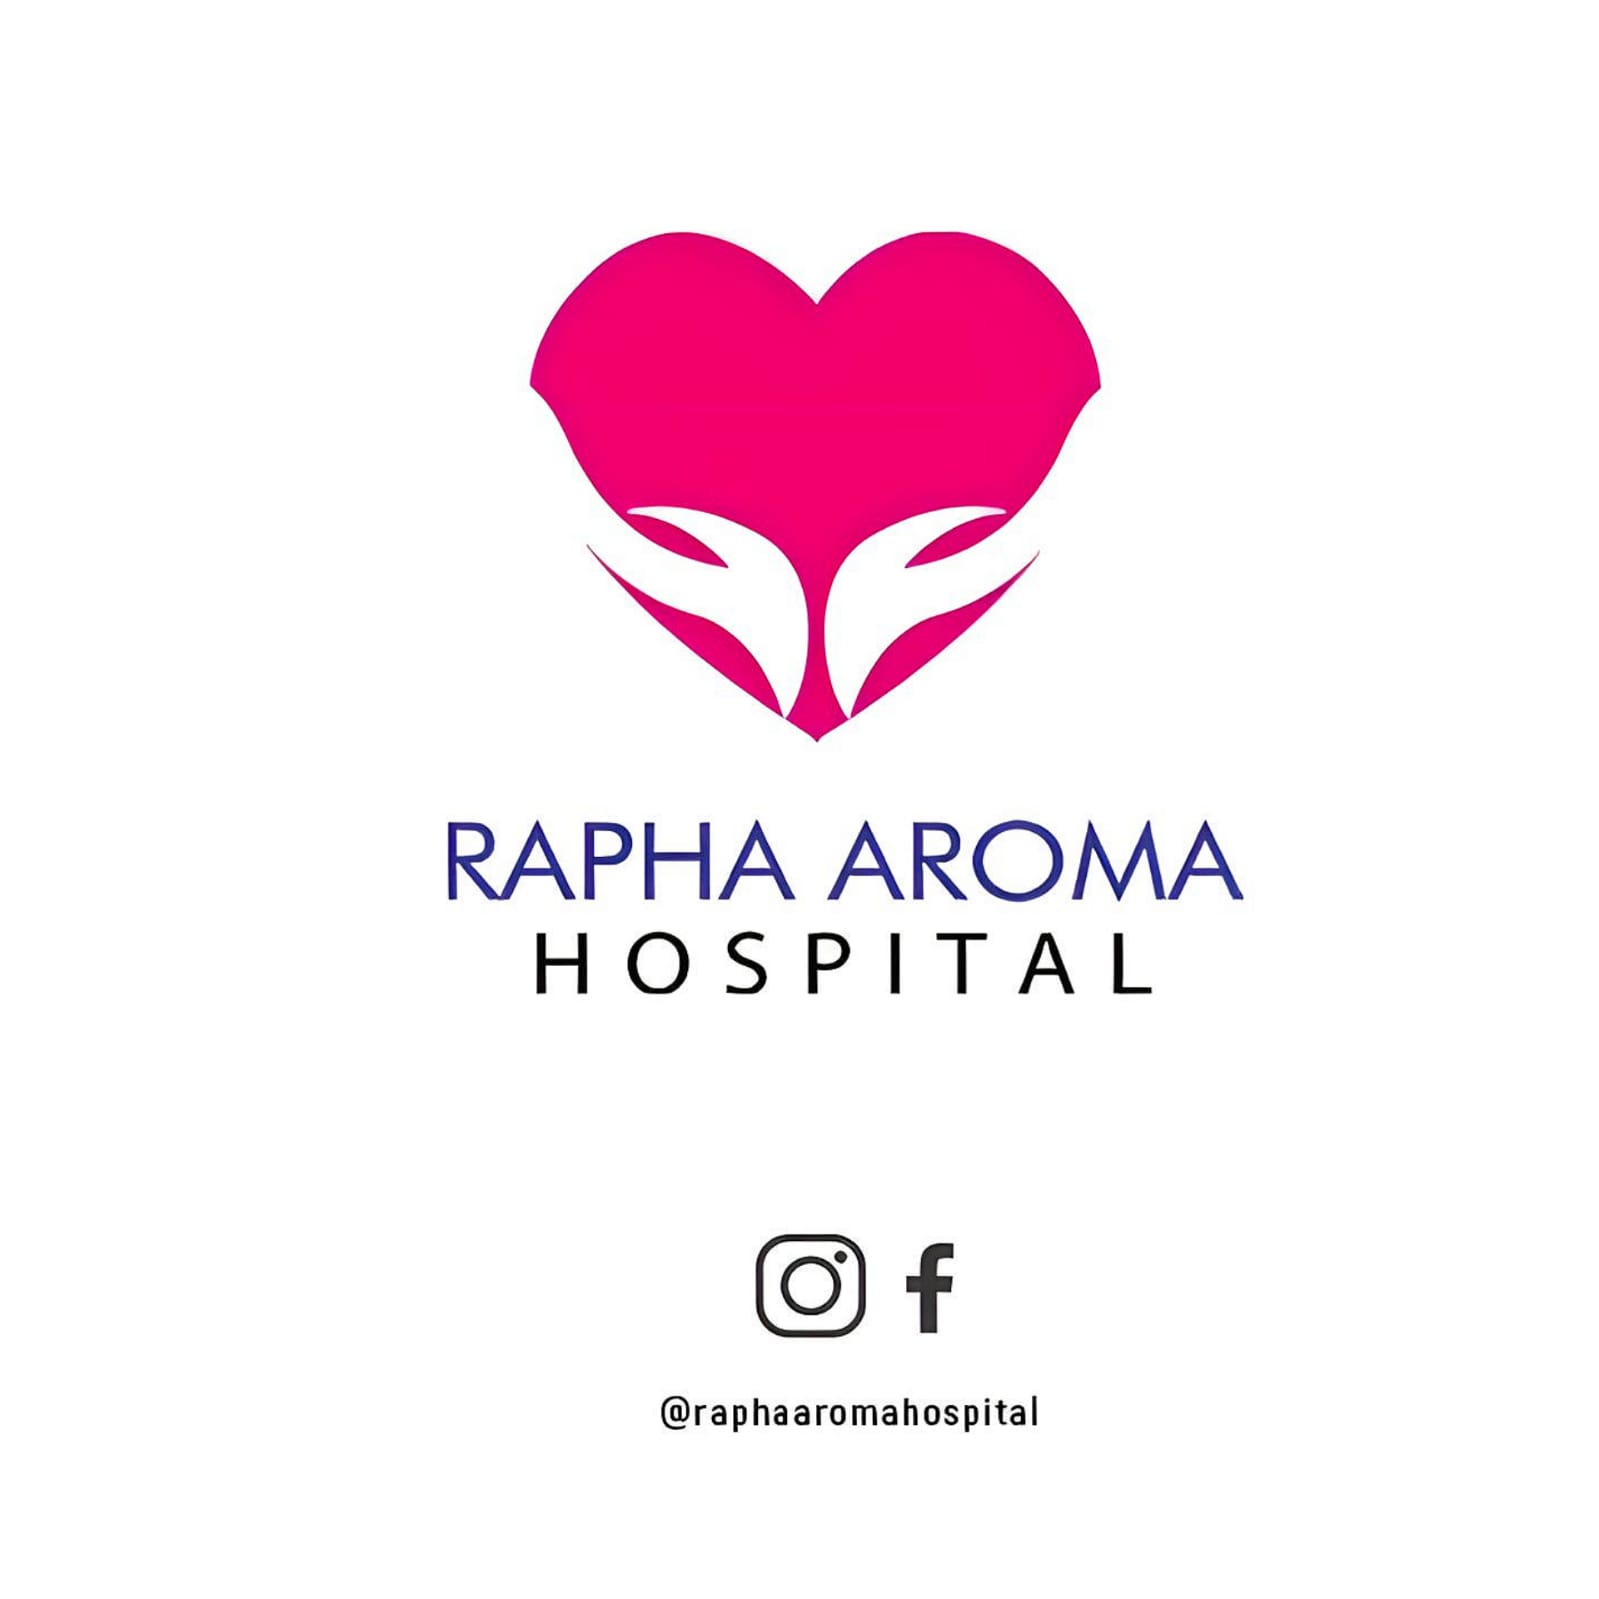 RAPHA AROMA HOSPITAL